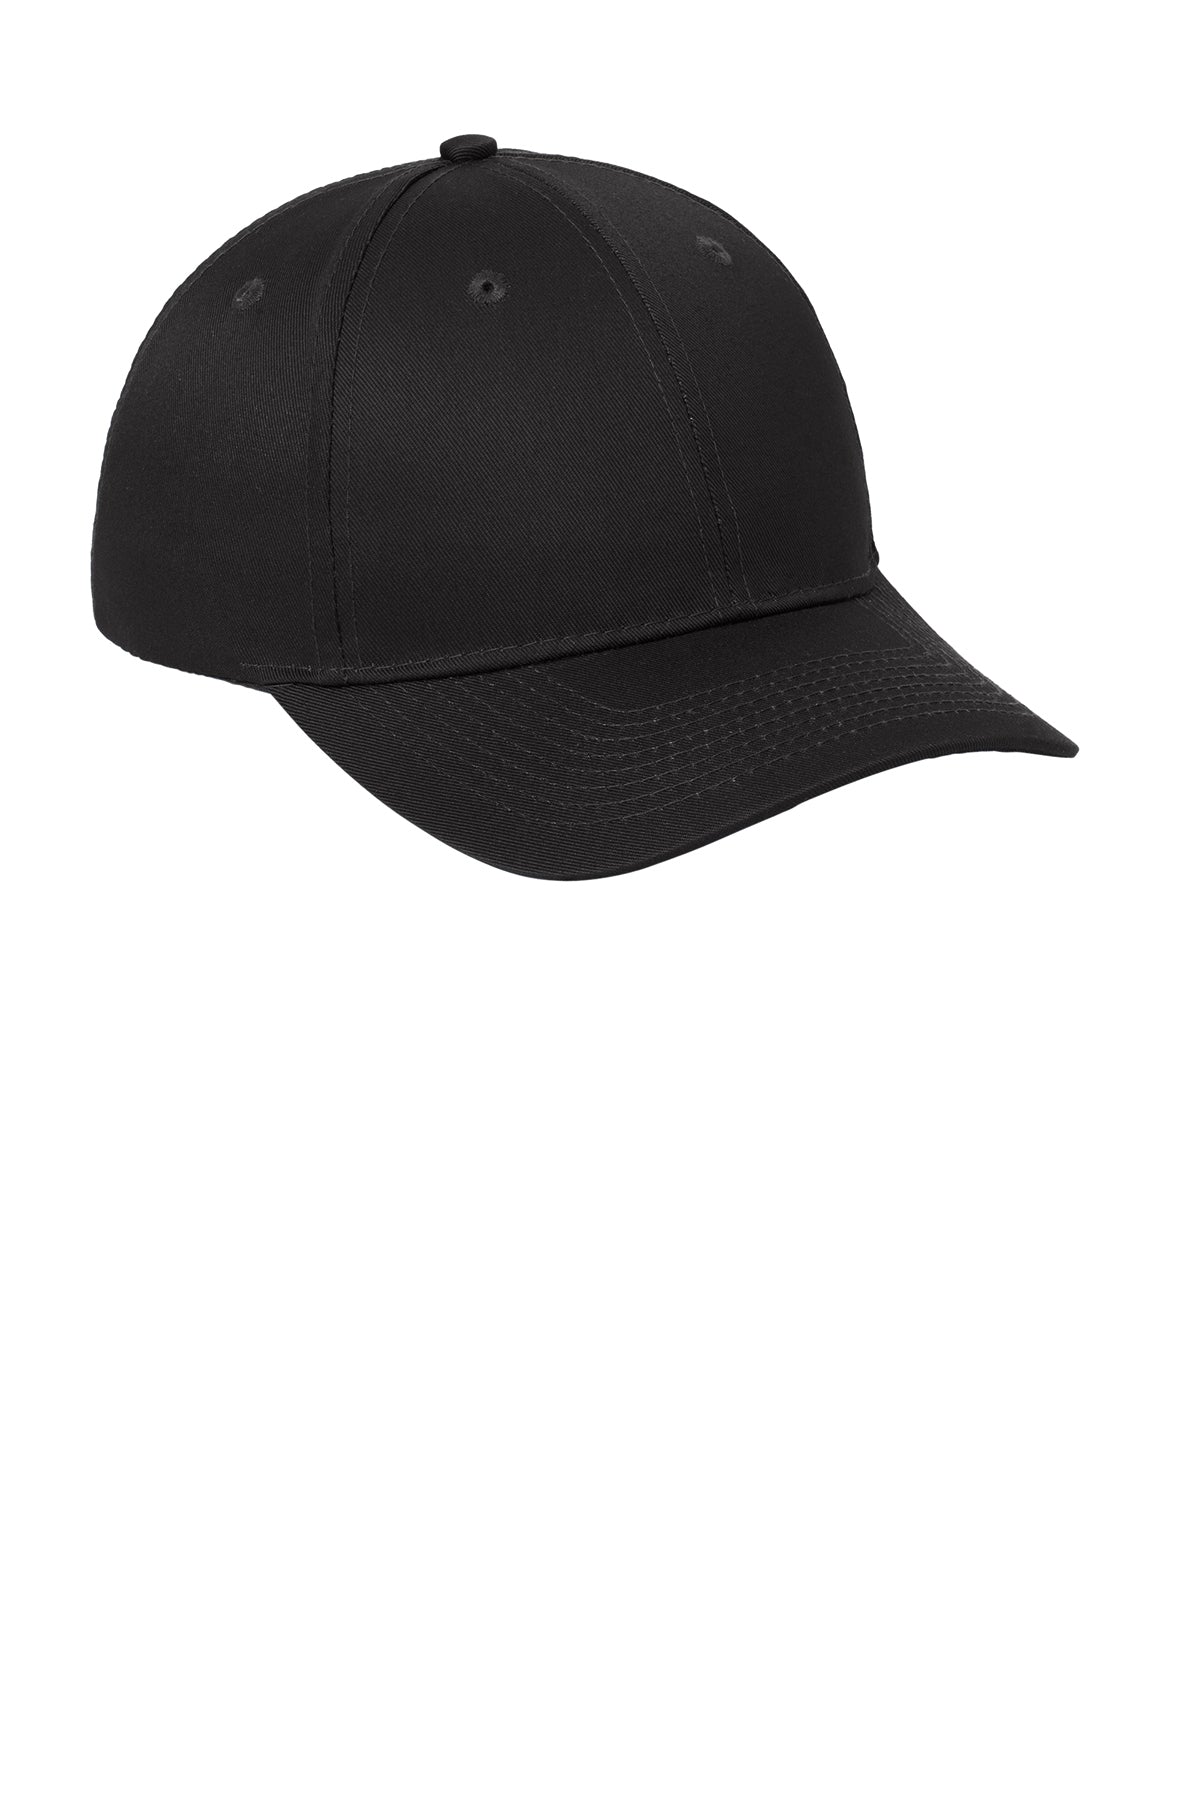 Port Authority Uniforming Branded Twill Caps, Black